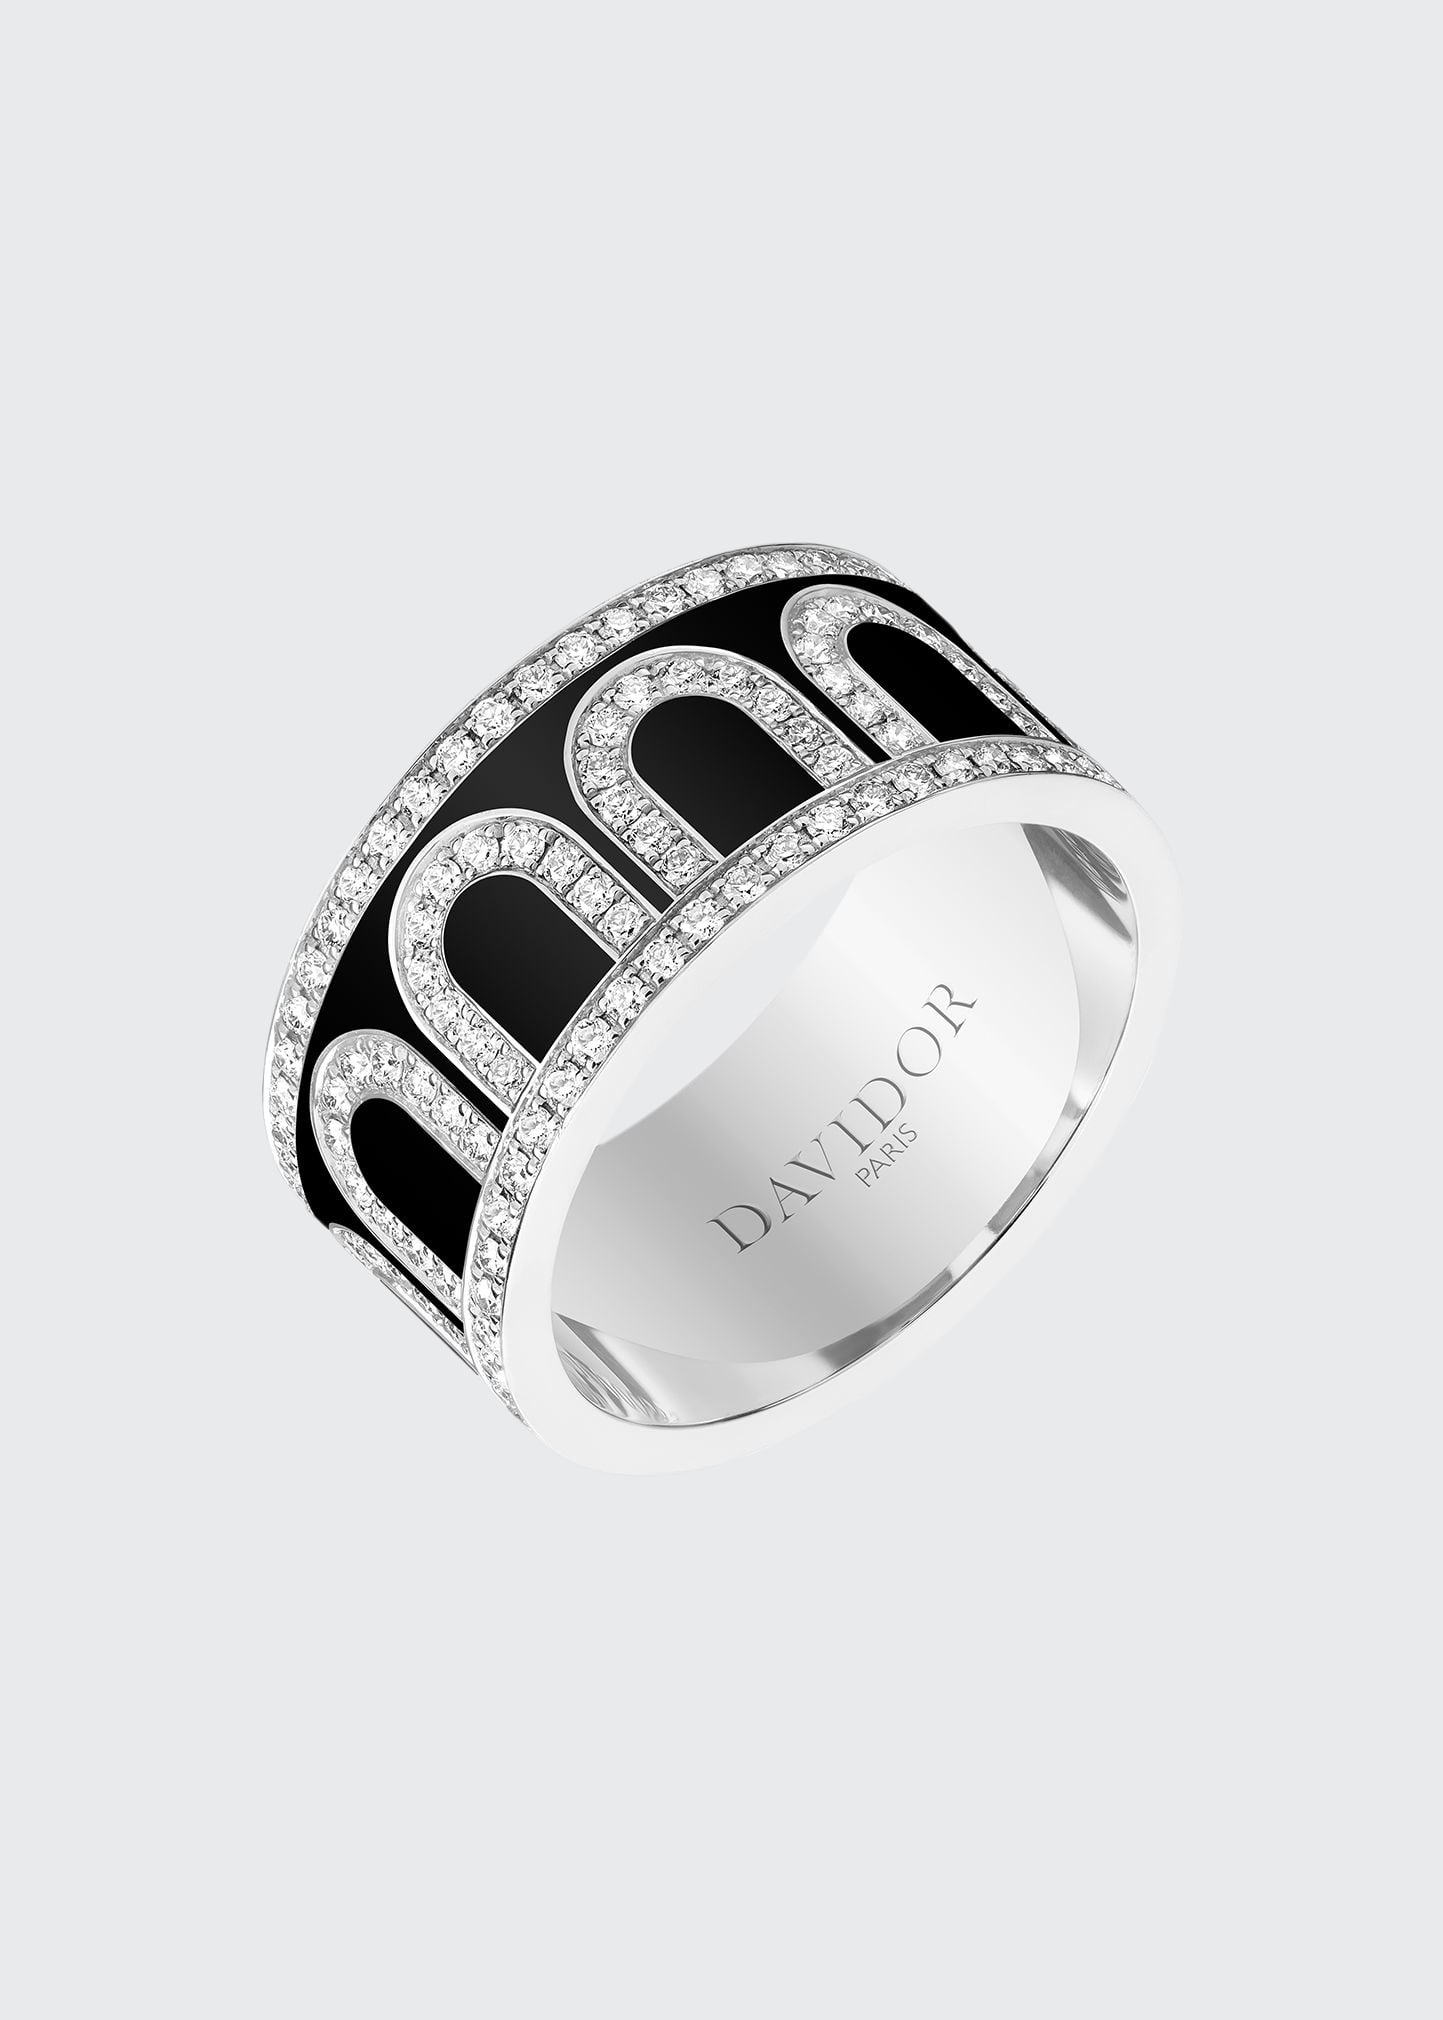 DAVIDOR L'Arc de Davidor 18k White Gold Palais Diamond Ring - Grand Model, Caviar, Size 54